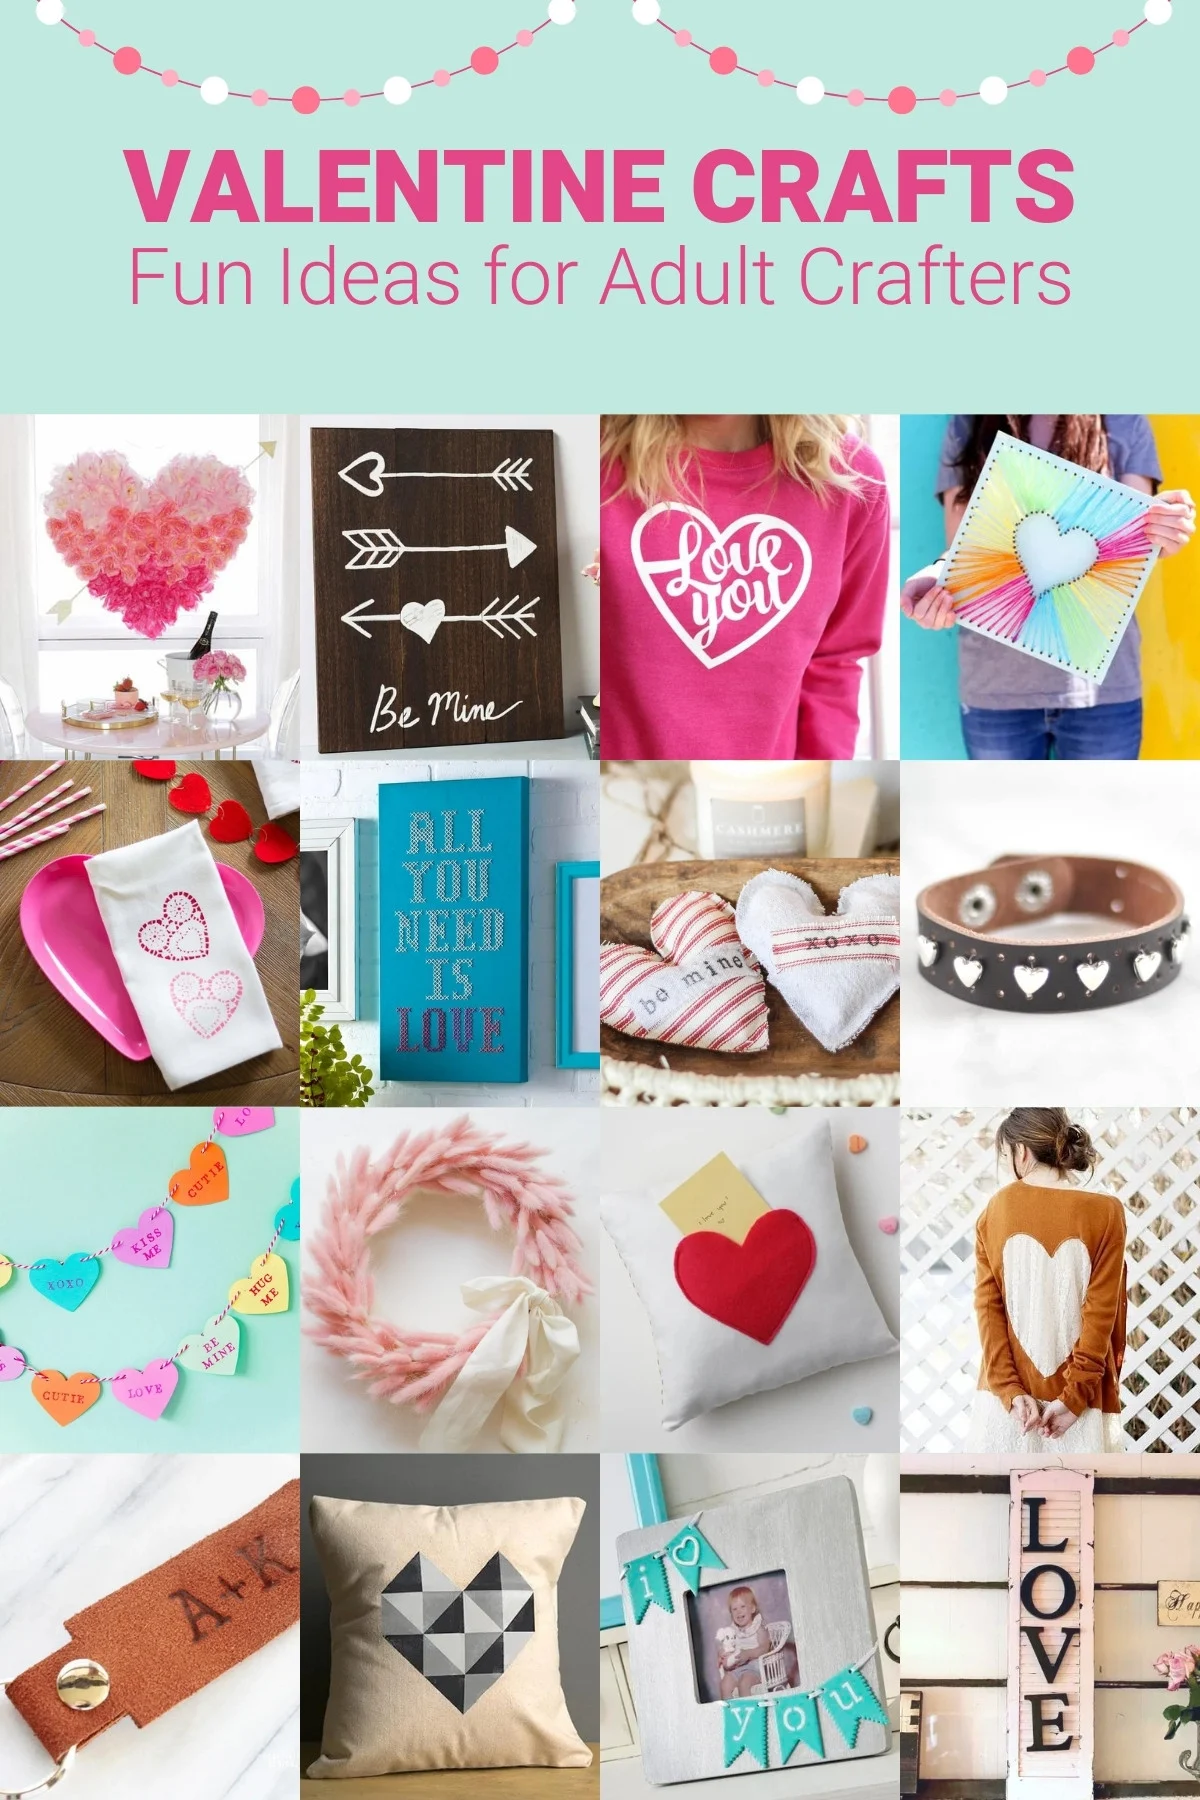 45+ Valentine Crafts for Adults You'll Love to Make! - Mod Podge Rocks